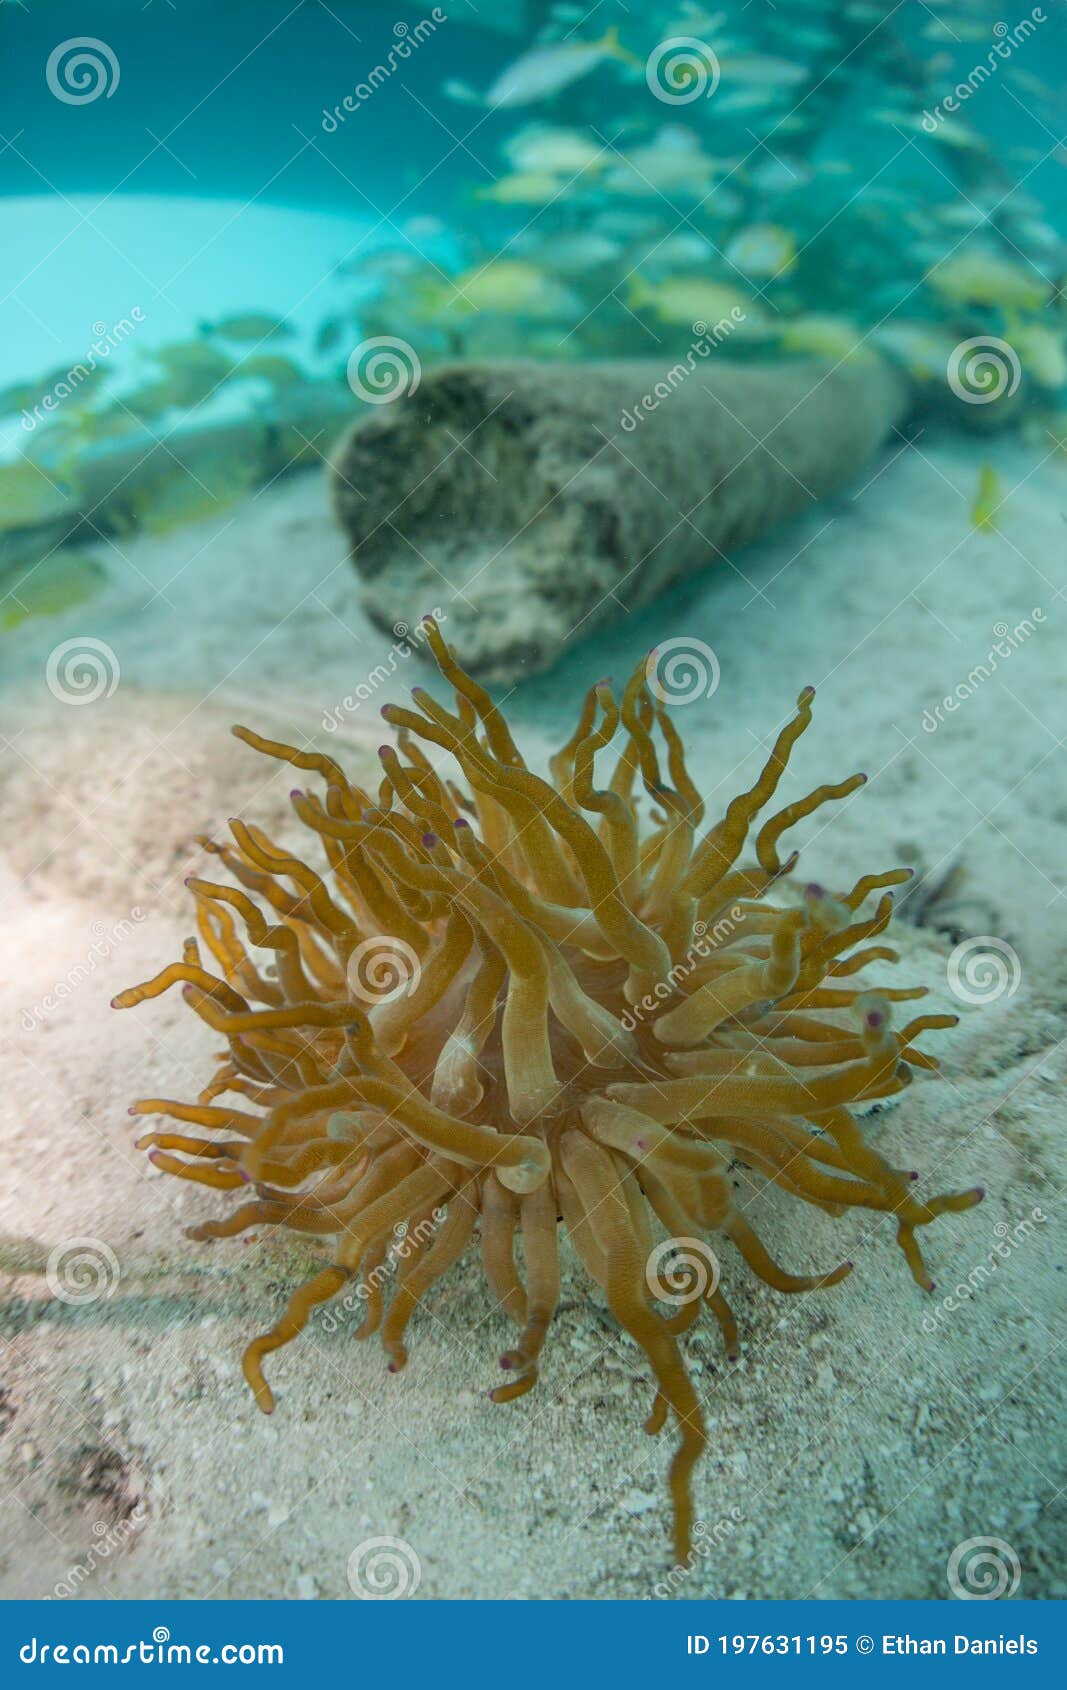 anemone on seafloor in caribbean sea